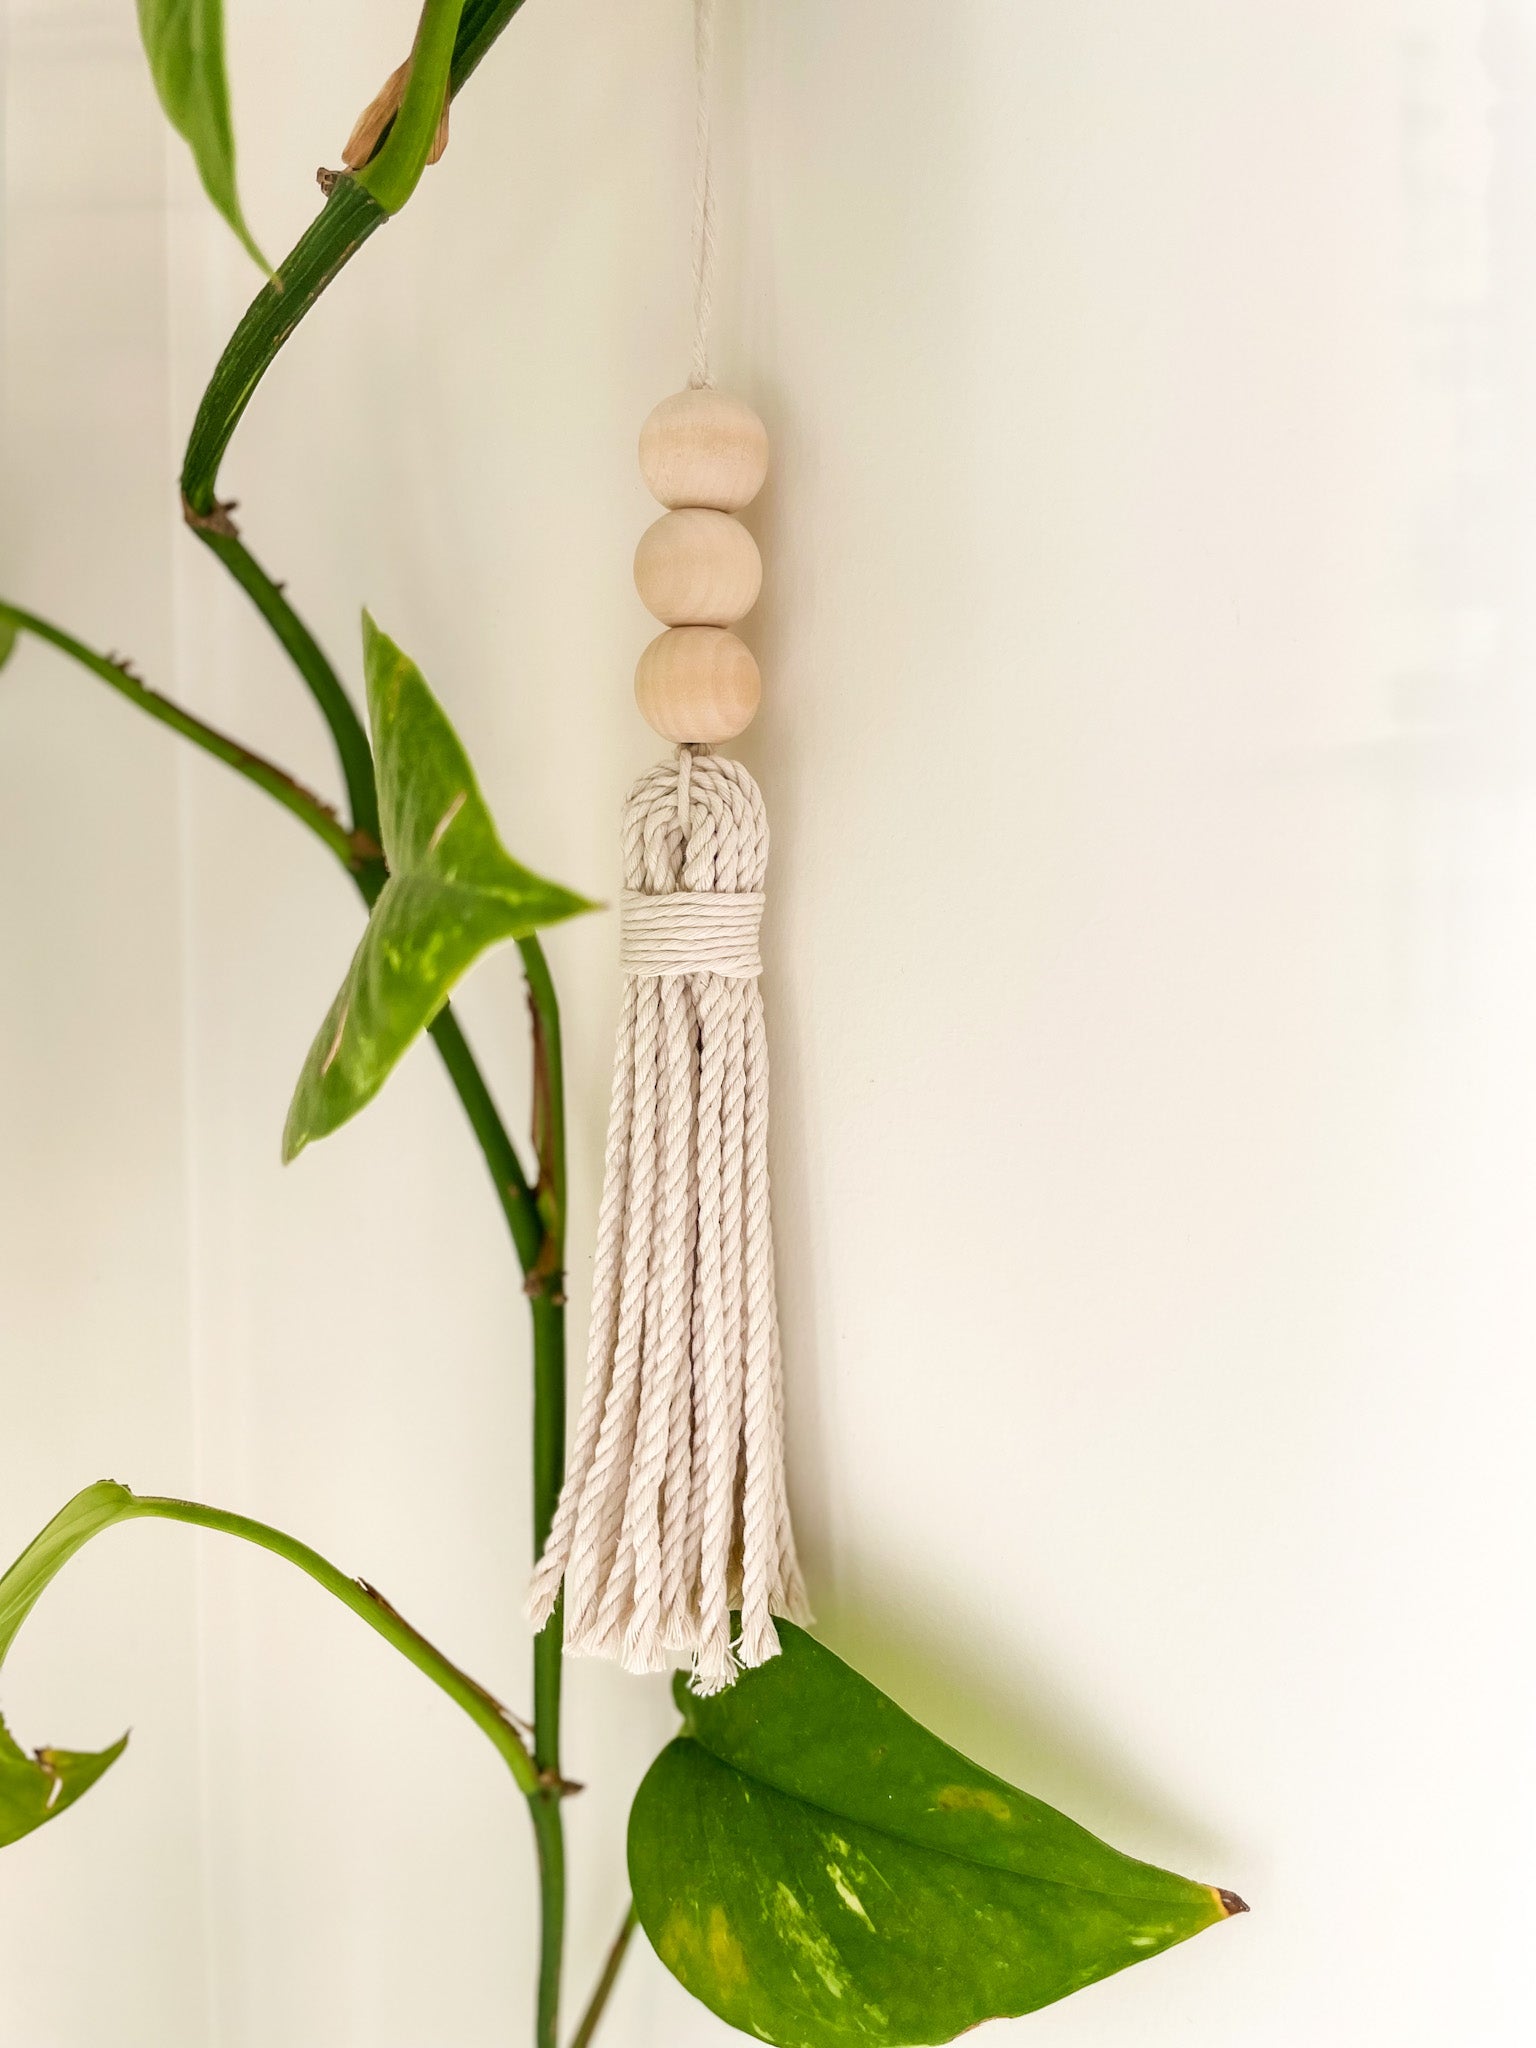 Beaded macrame tassels hanging hanged on the wall amongst pothos leaves. 